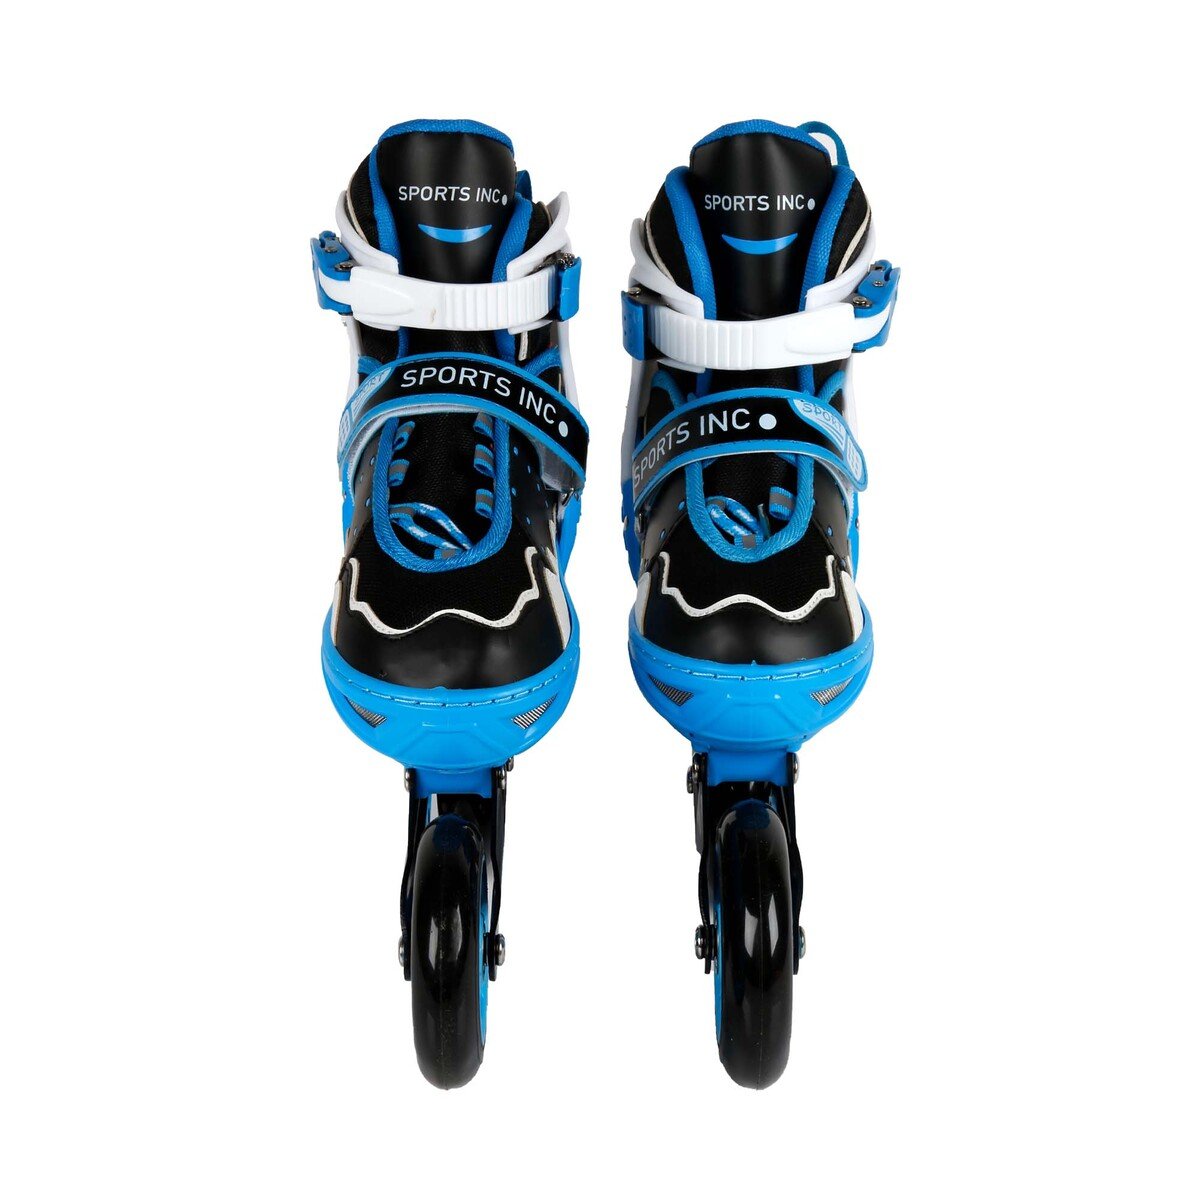 Sports Inc Inline Skating Shoe, 88810, Black/Blue, Size: 34-38